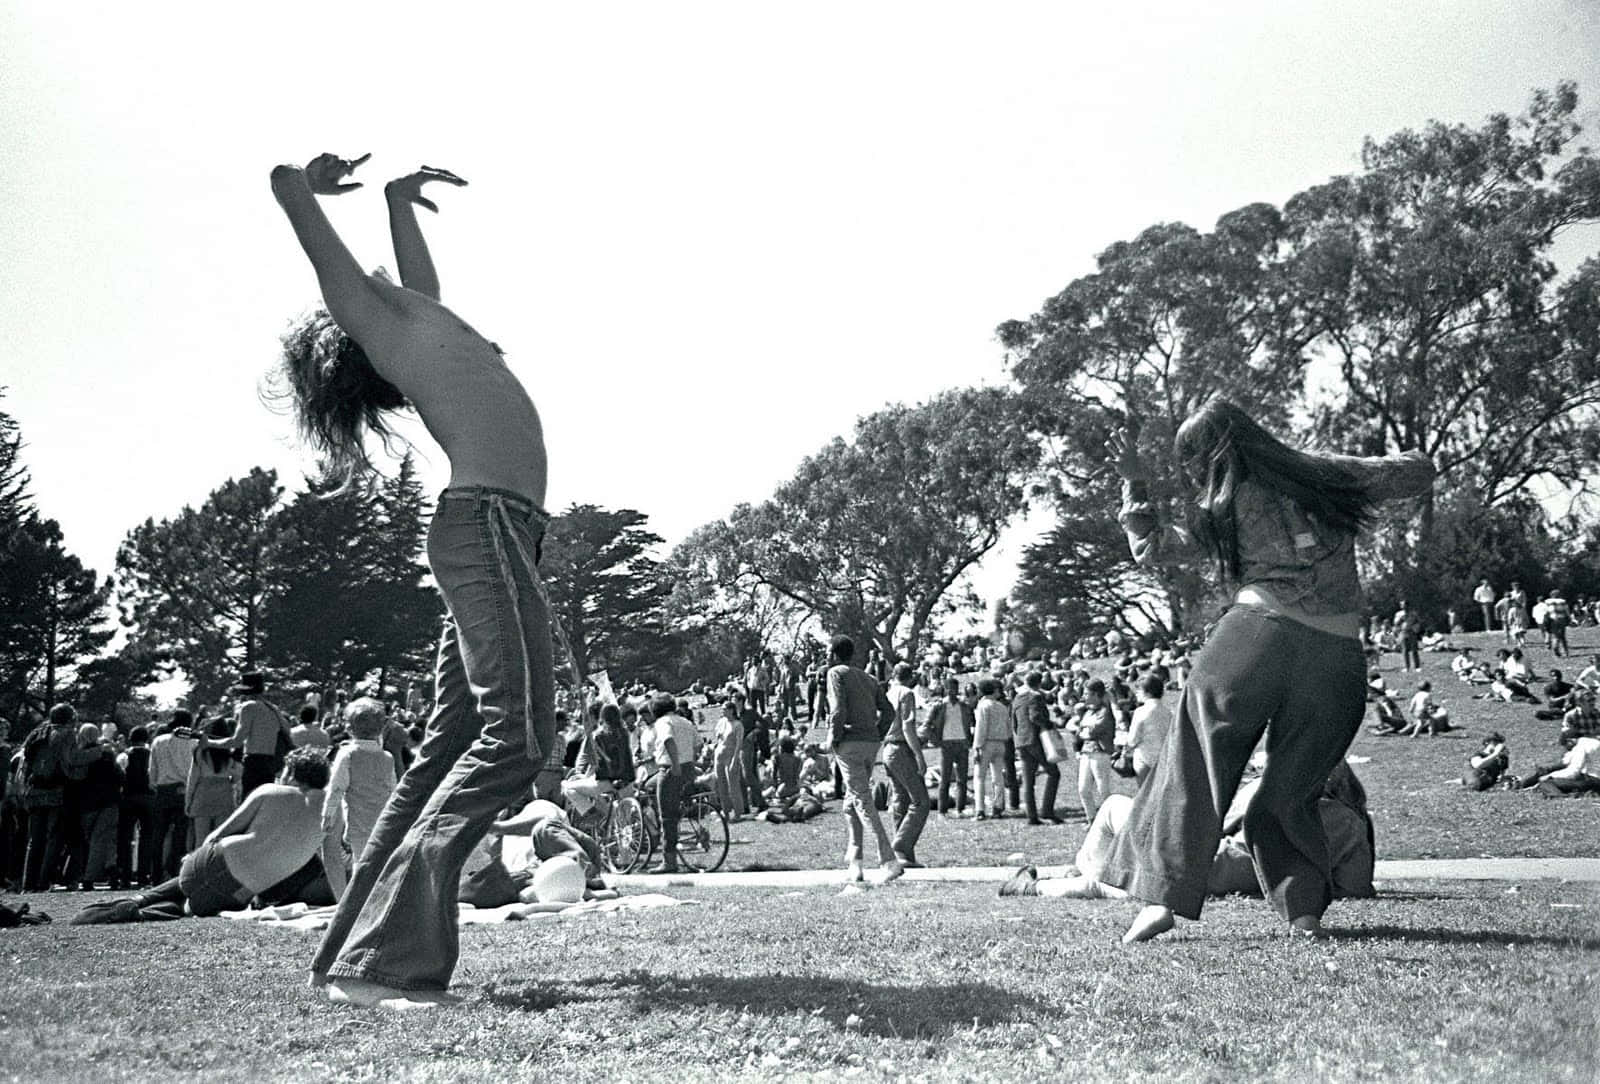 Peace&Music at the Legendary Woodstock Festival